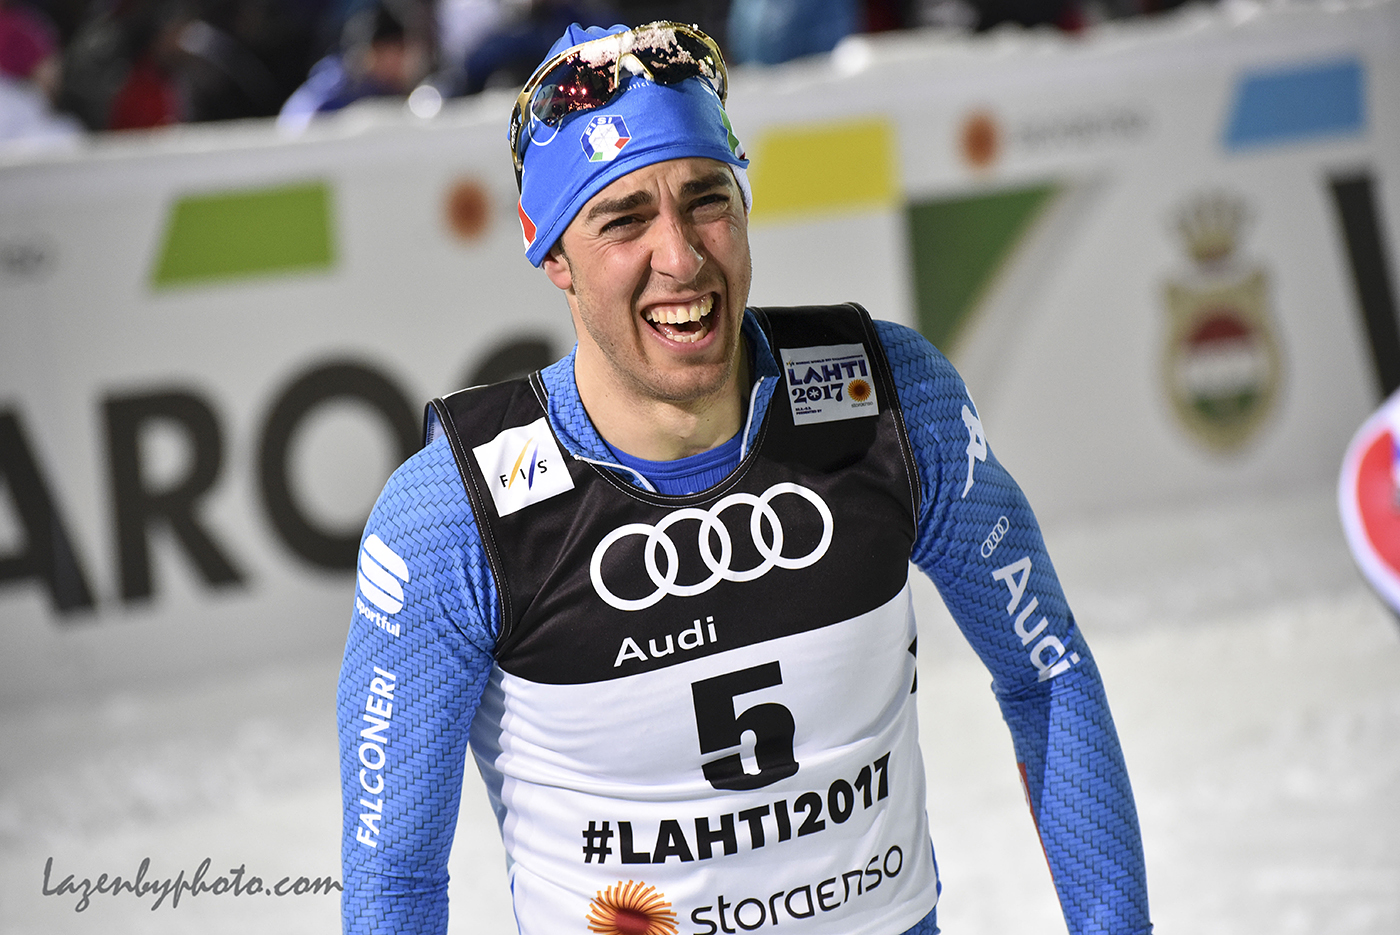 Finally a World Champion: Pellegrino Comes Up Big in Lahti Sprint